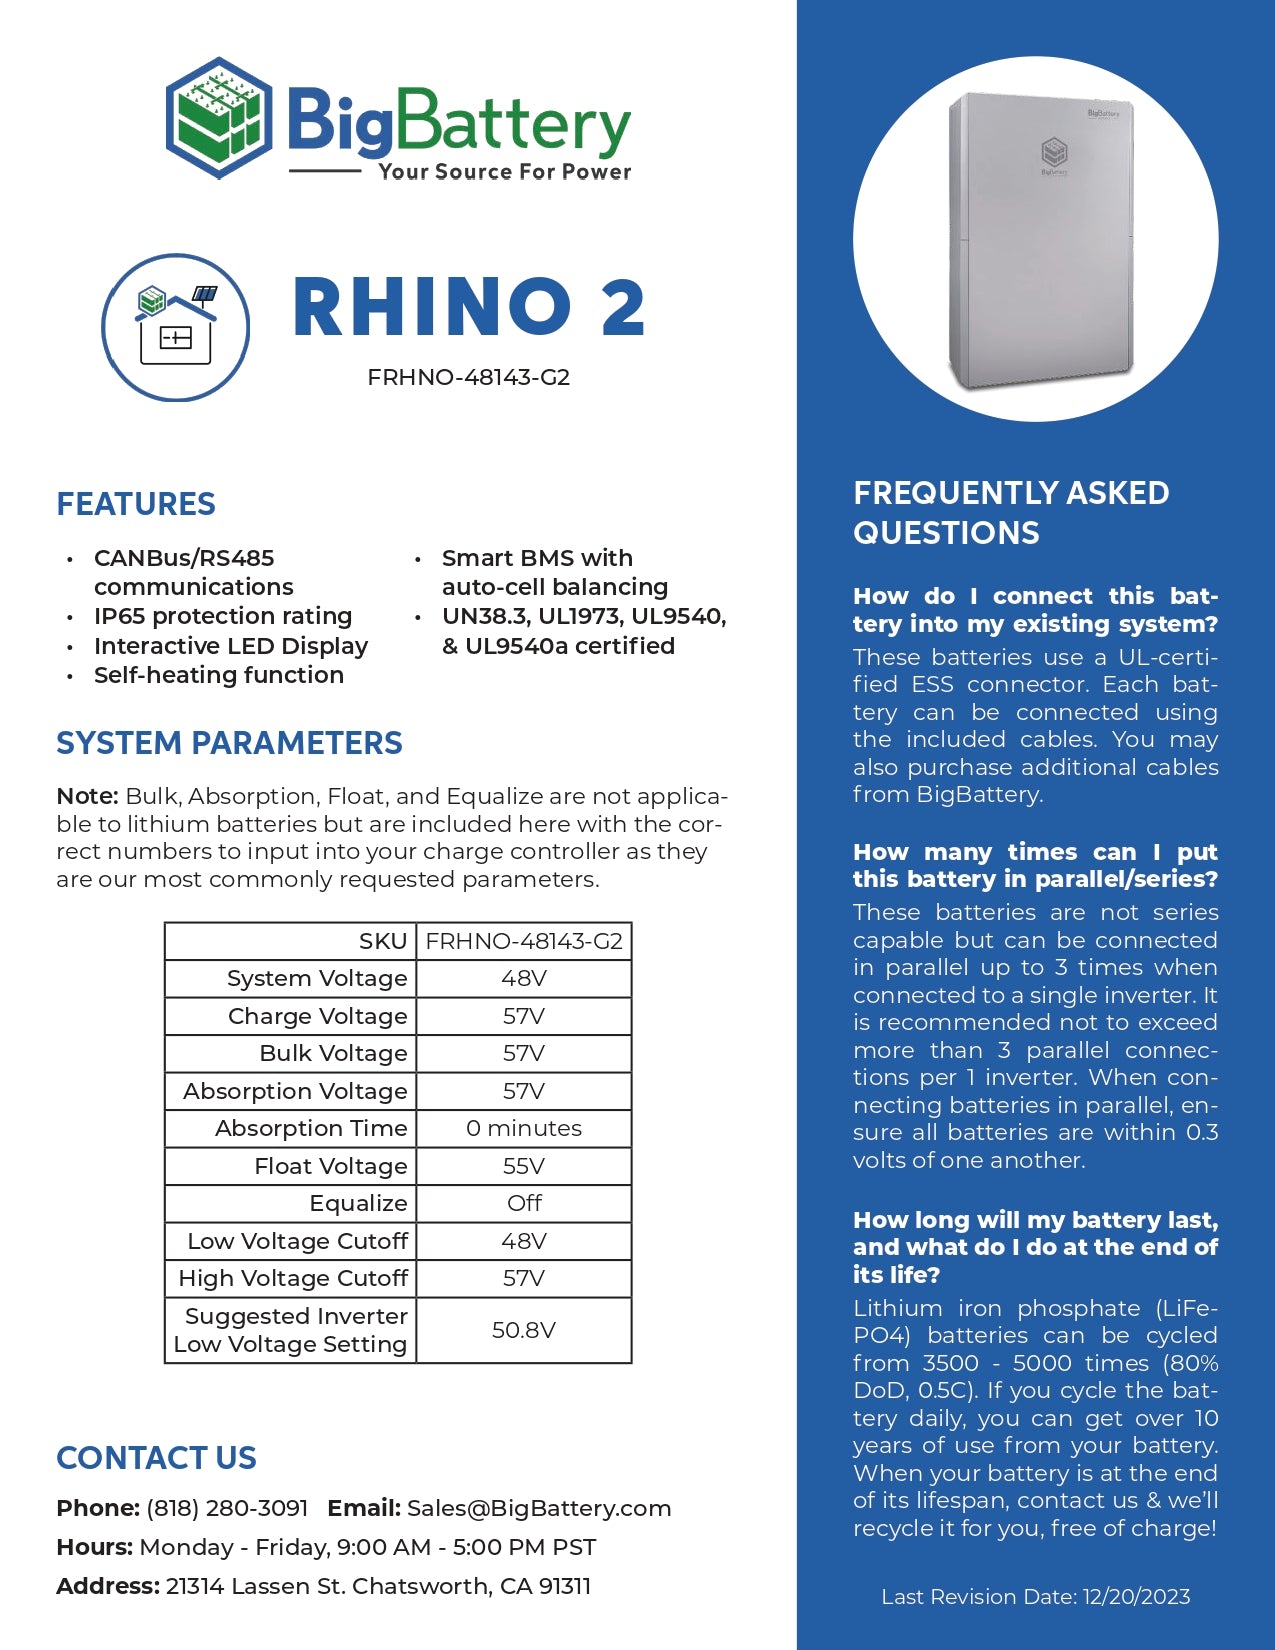 12kW 14.3kWh Rhino 2 Energy Storage System (ESS)